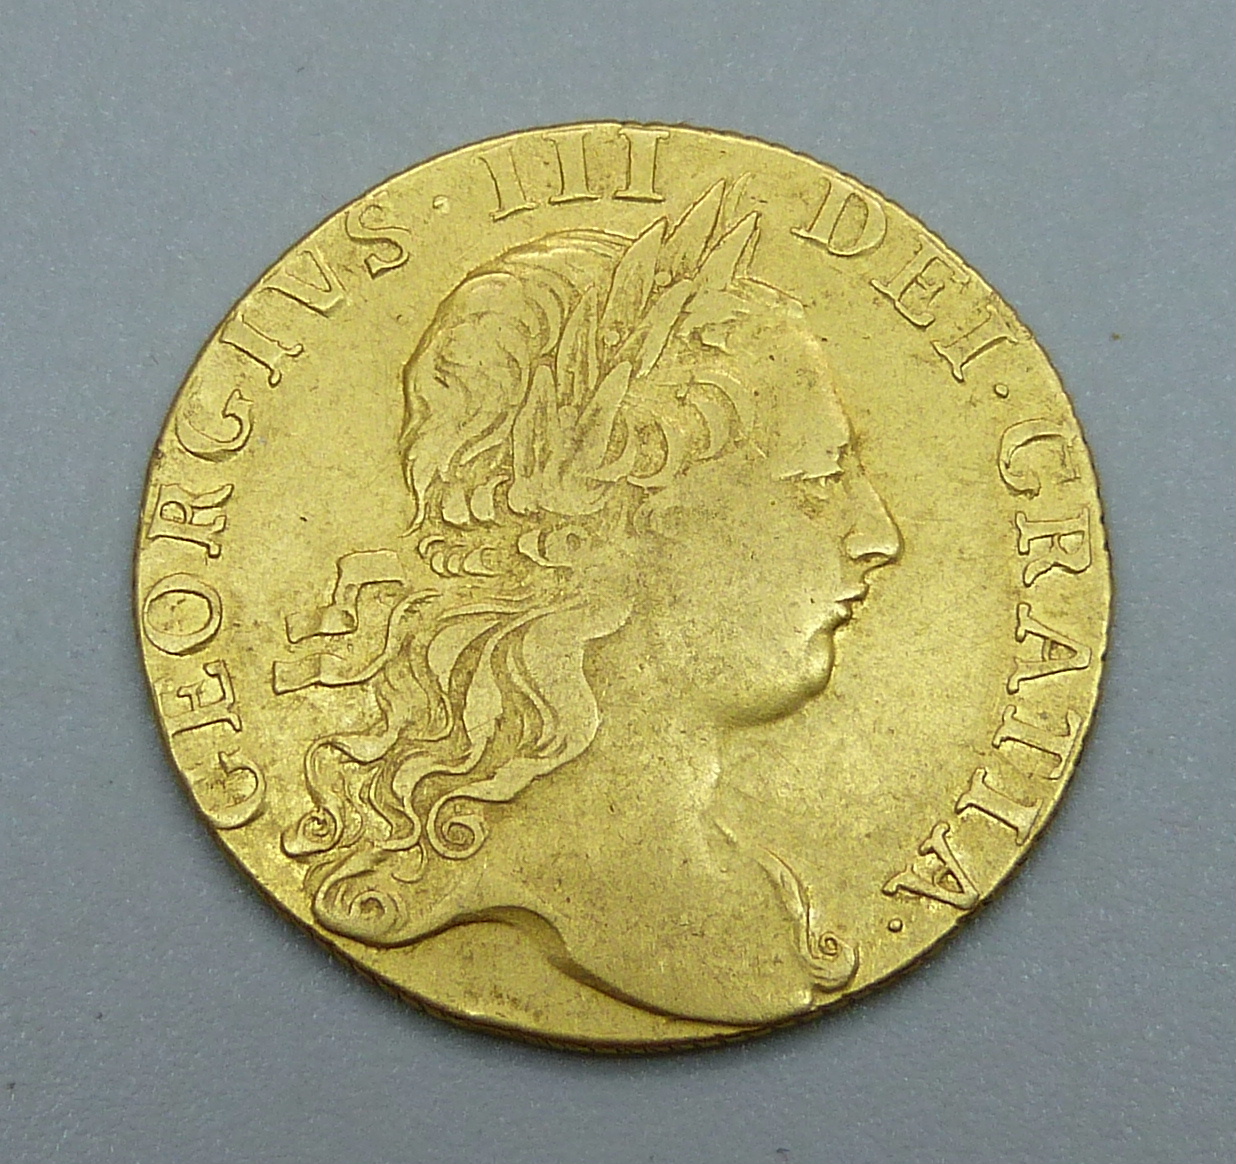 A George III 1765 gold guinea